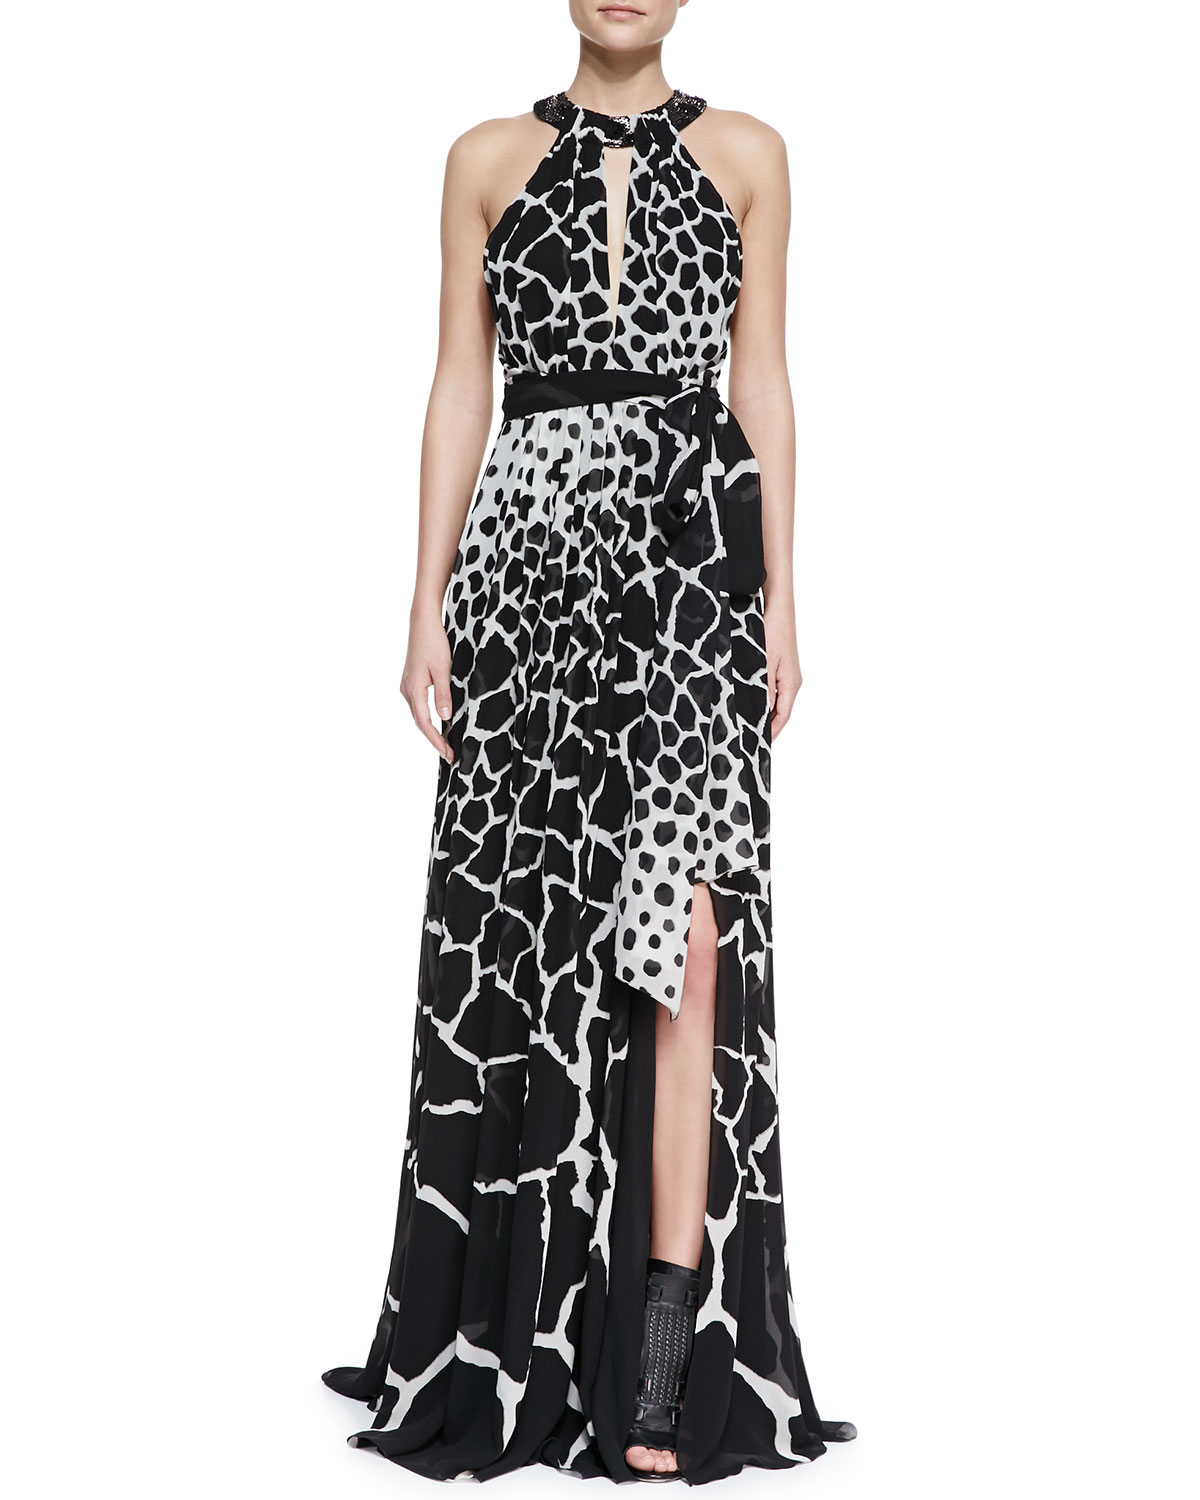 Lyst - Roberto Cavalli Halter-neck Giraffe-print Gown in Black